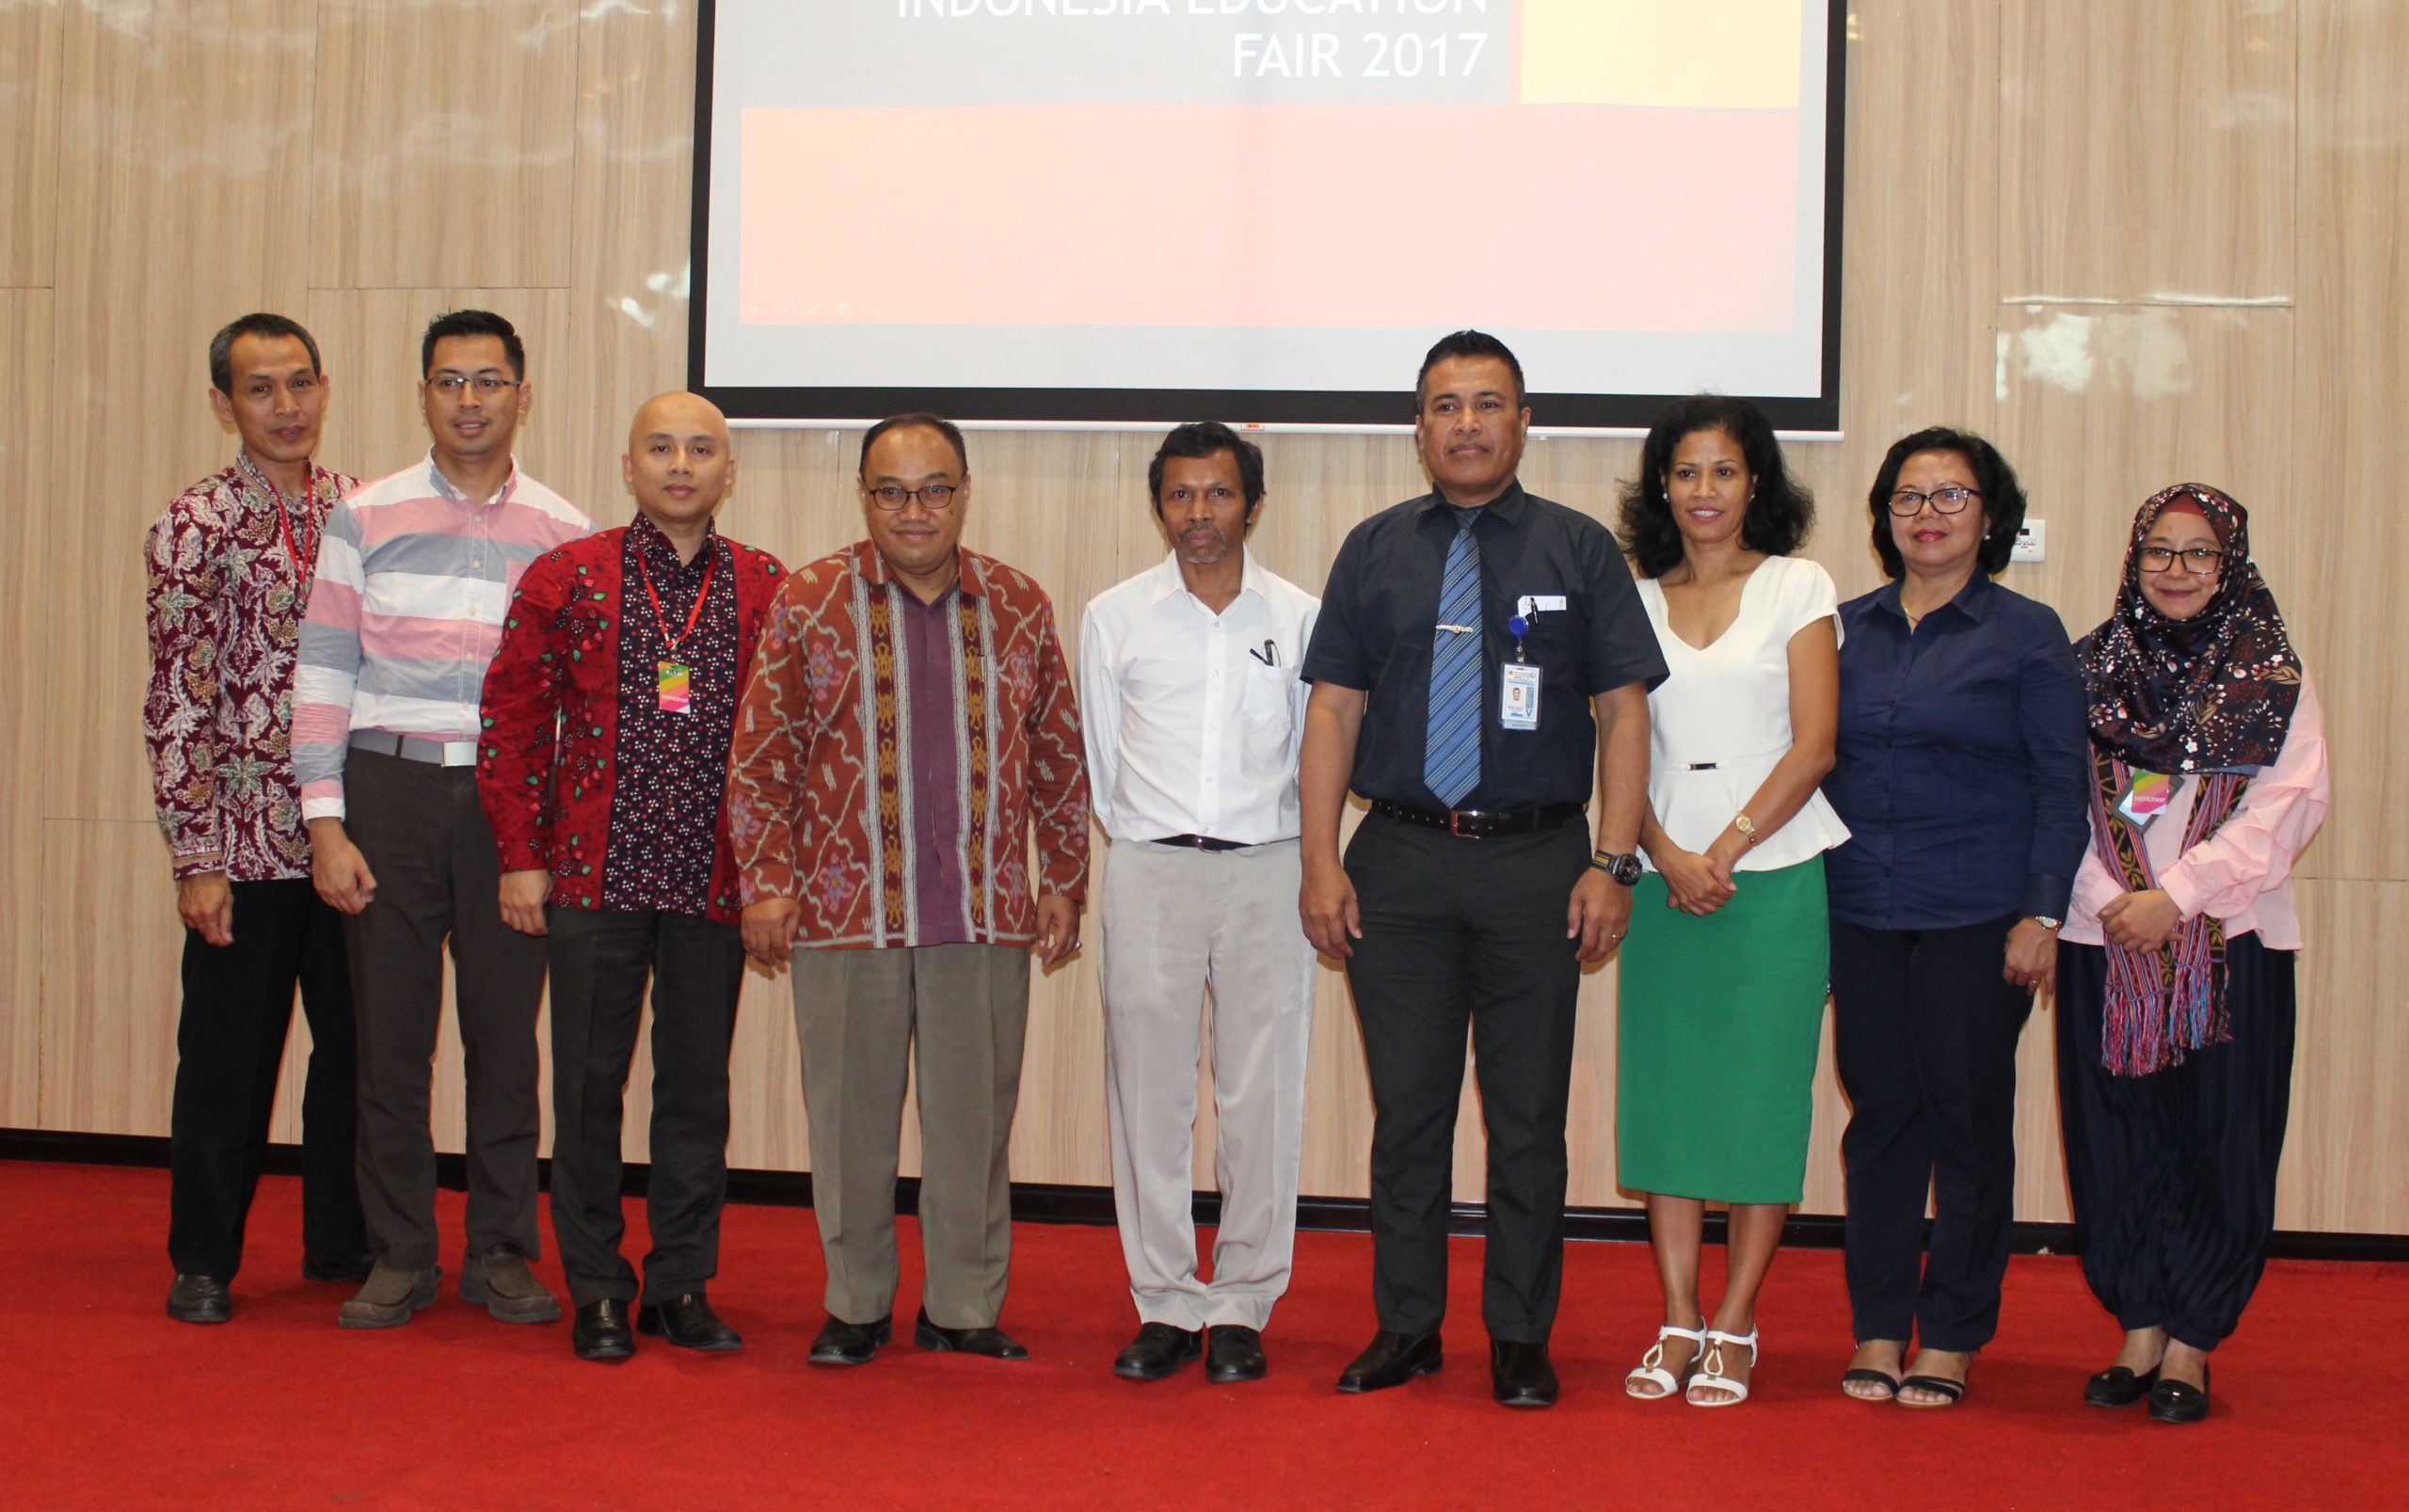 Indonesia Education Fair 2017 Timor Leste